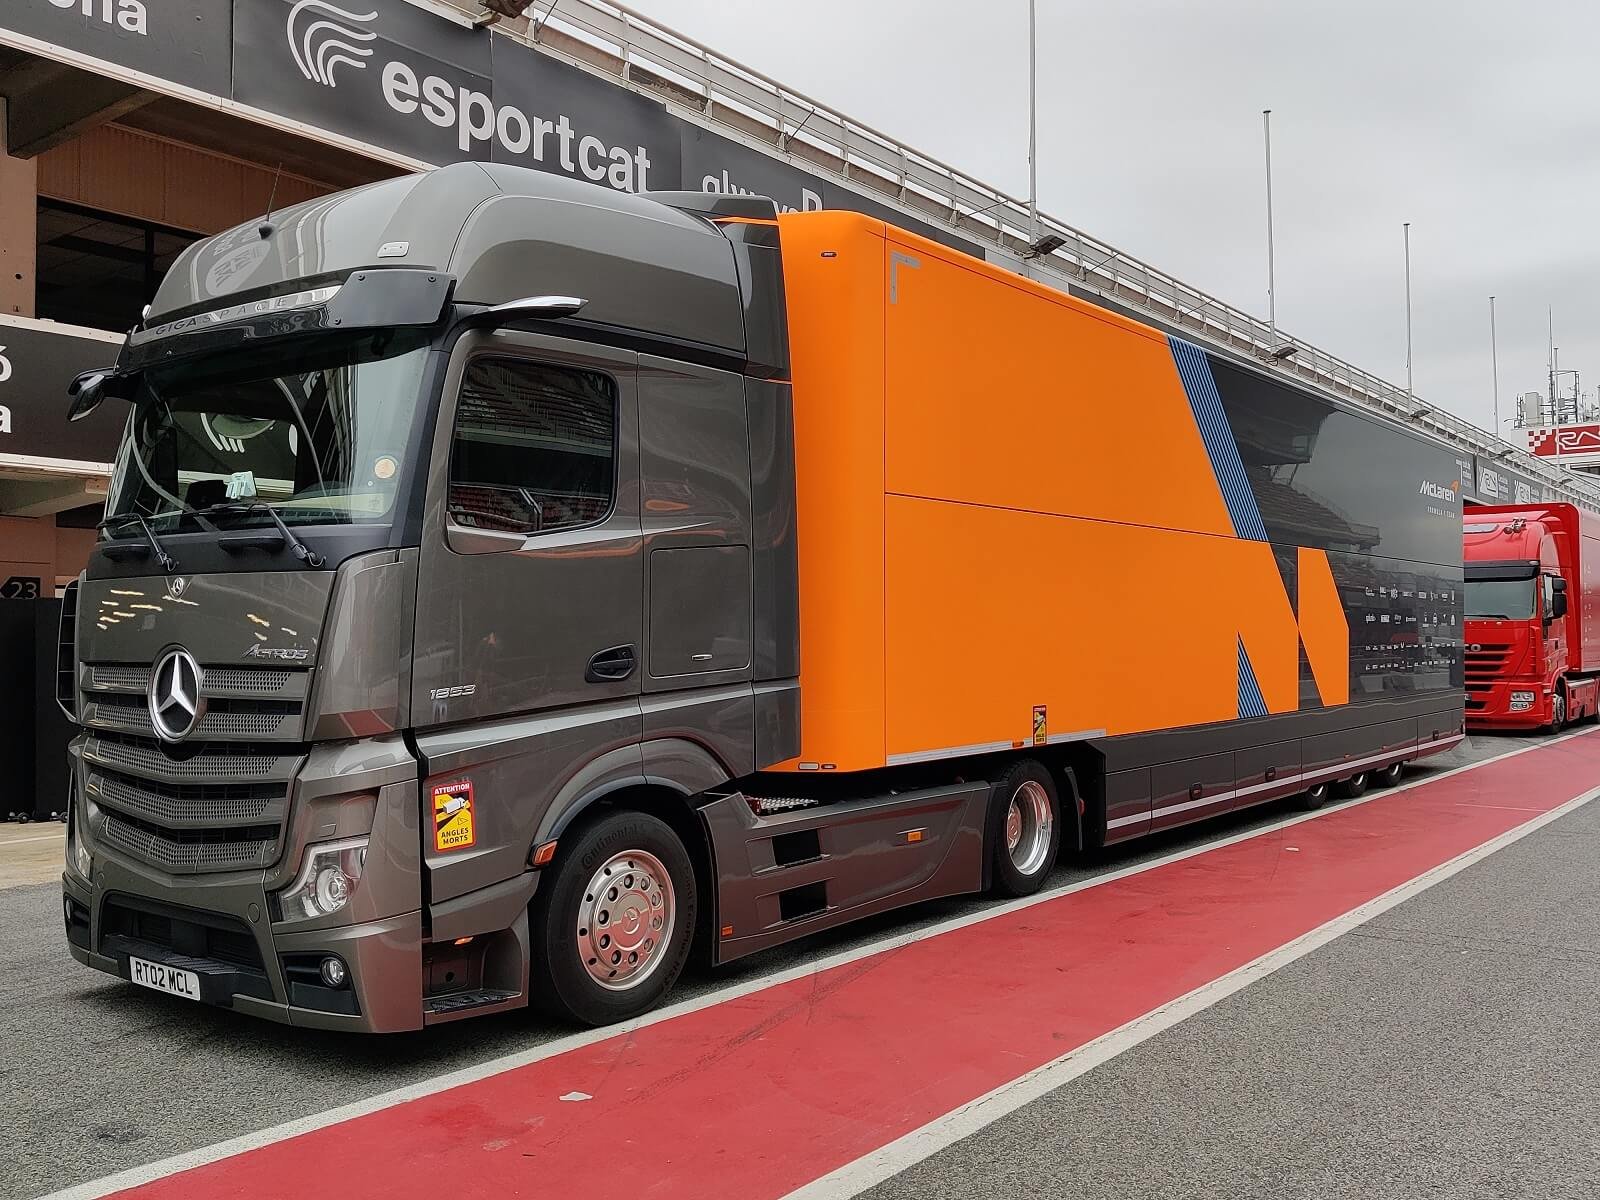 Spotted F1 Transporters Arrive For Barcelona Test — Trucks At Tracks